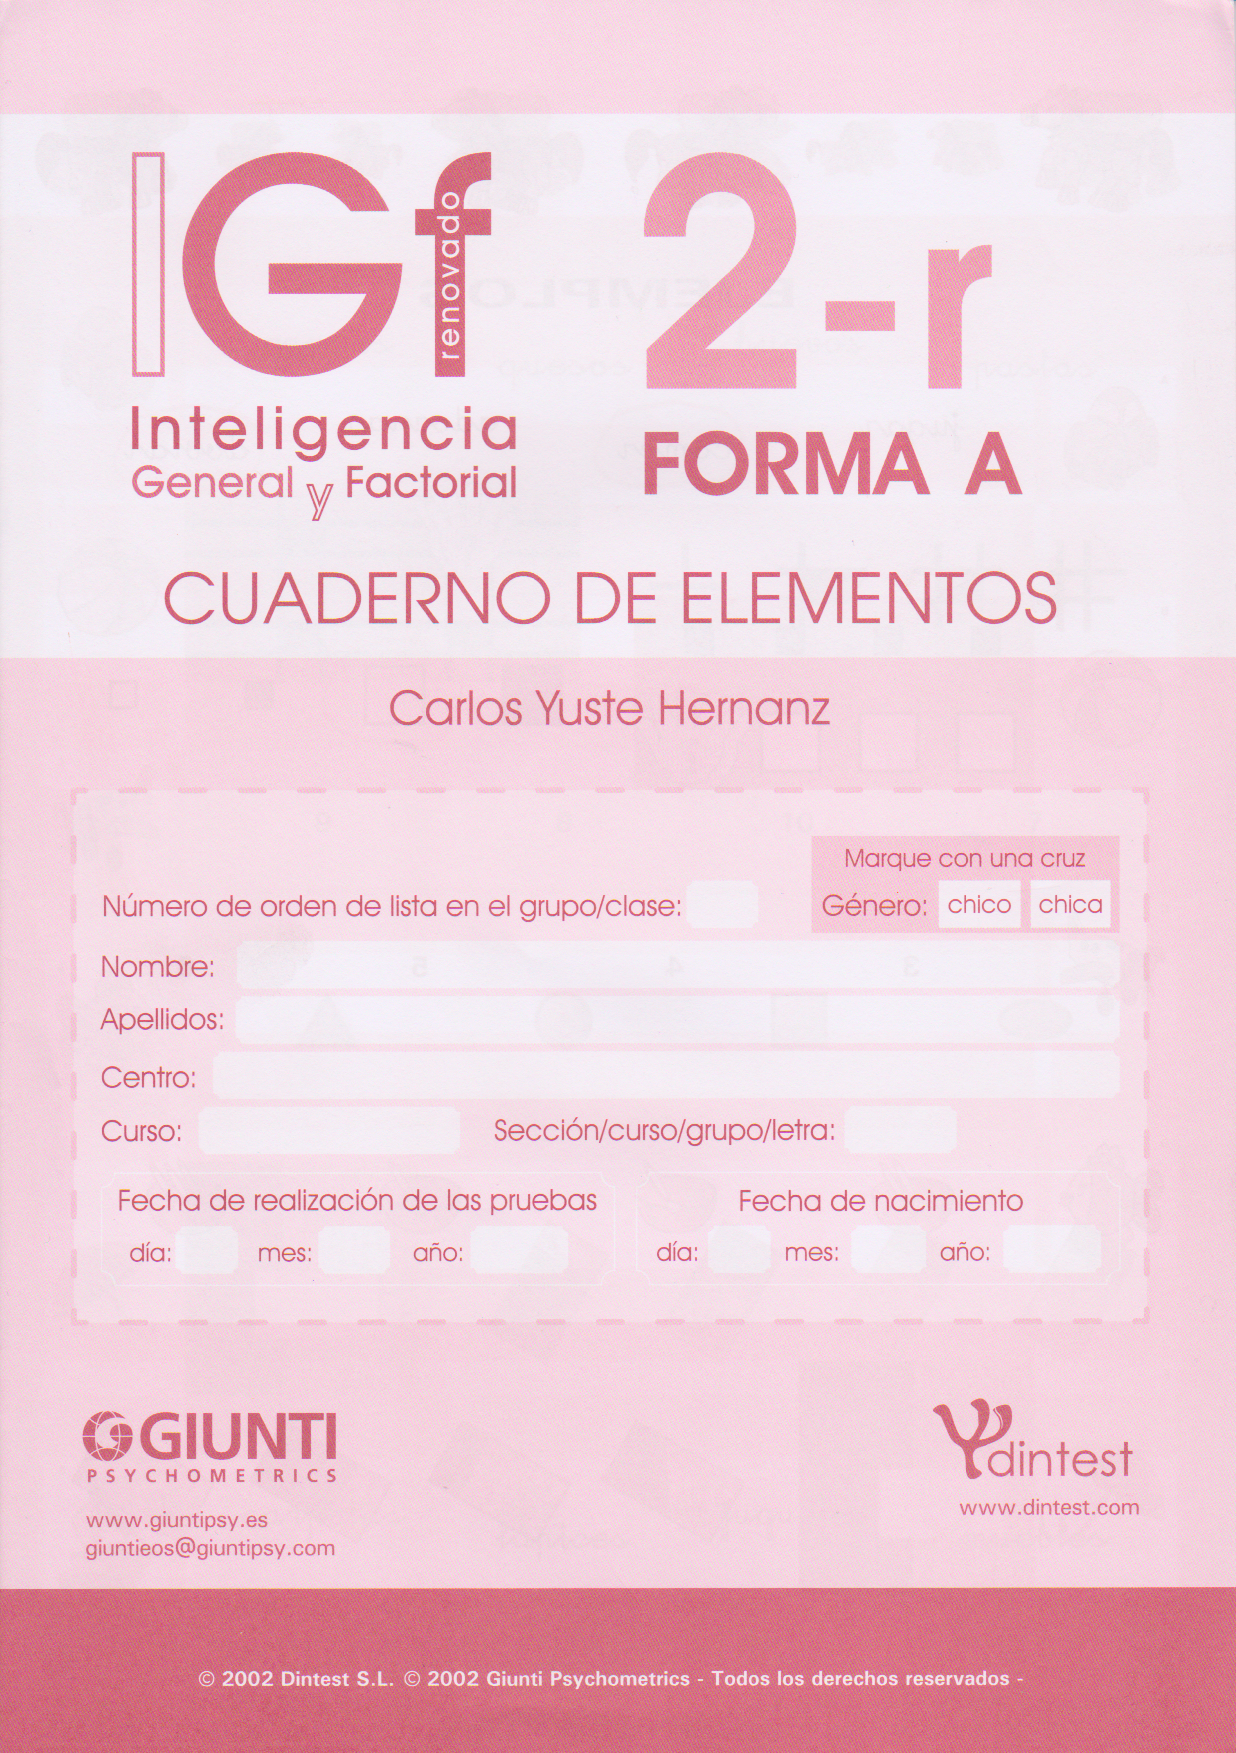 CuadernoElementos-IGF-2-formaA